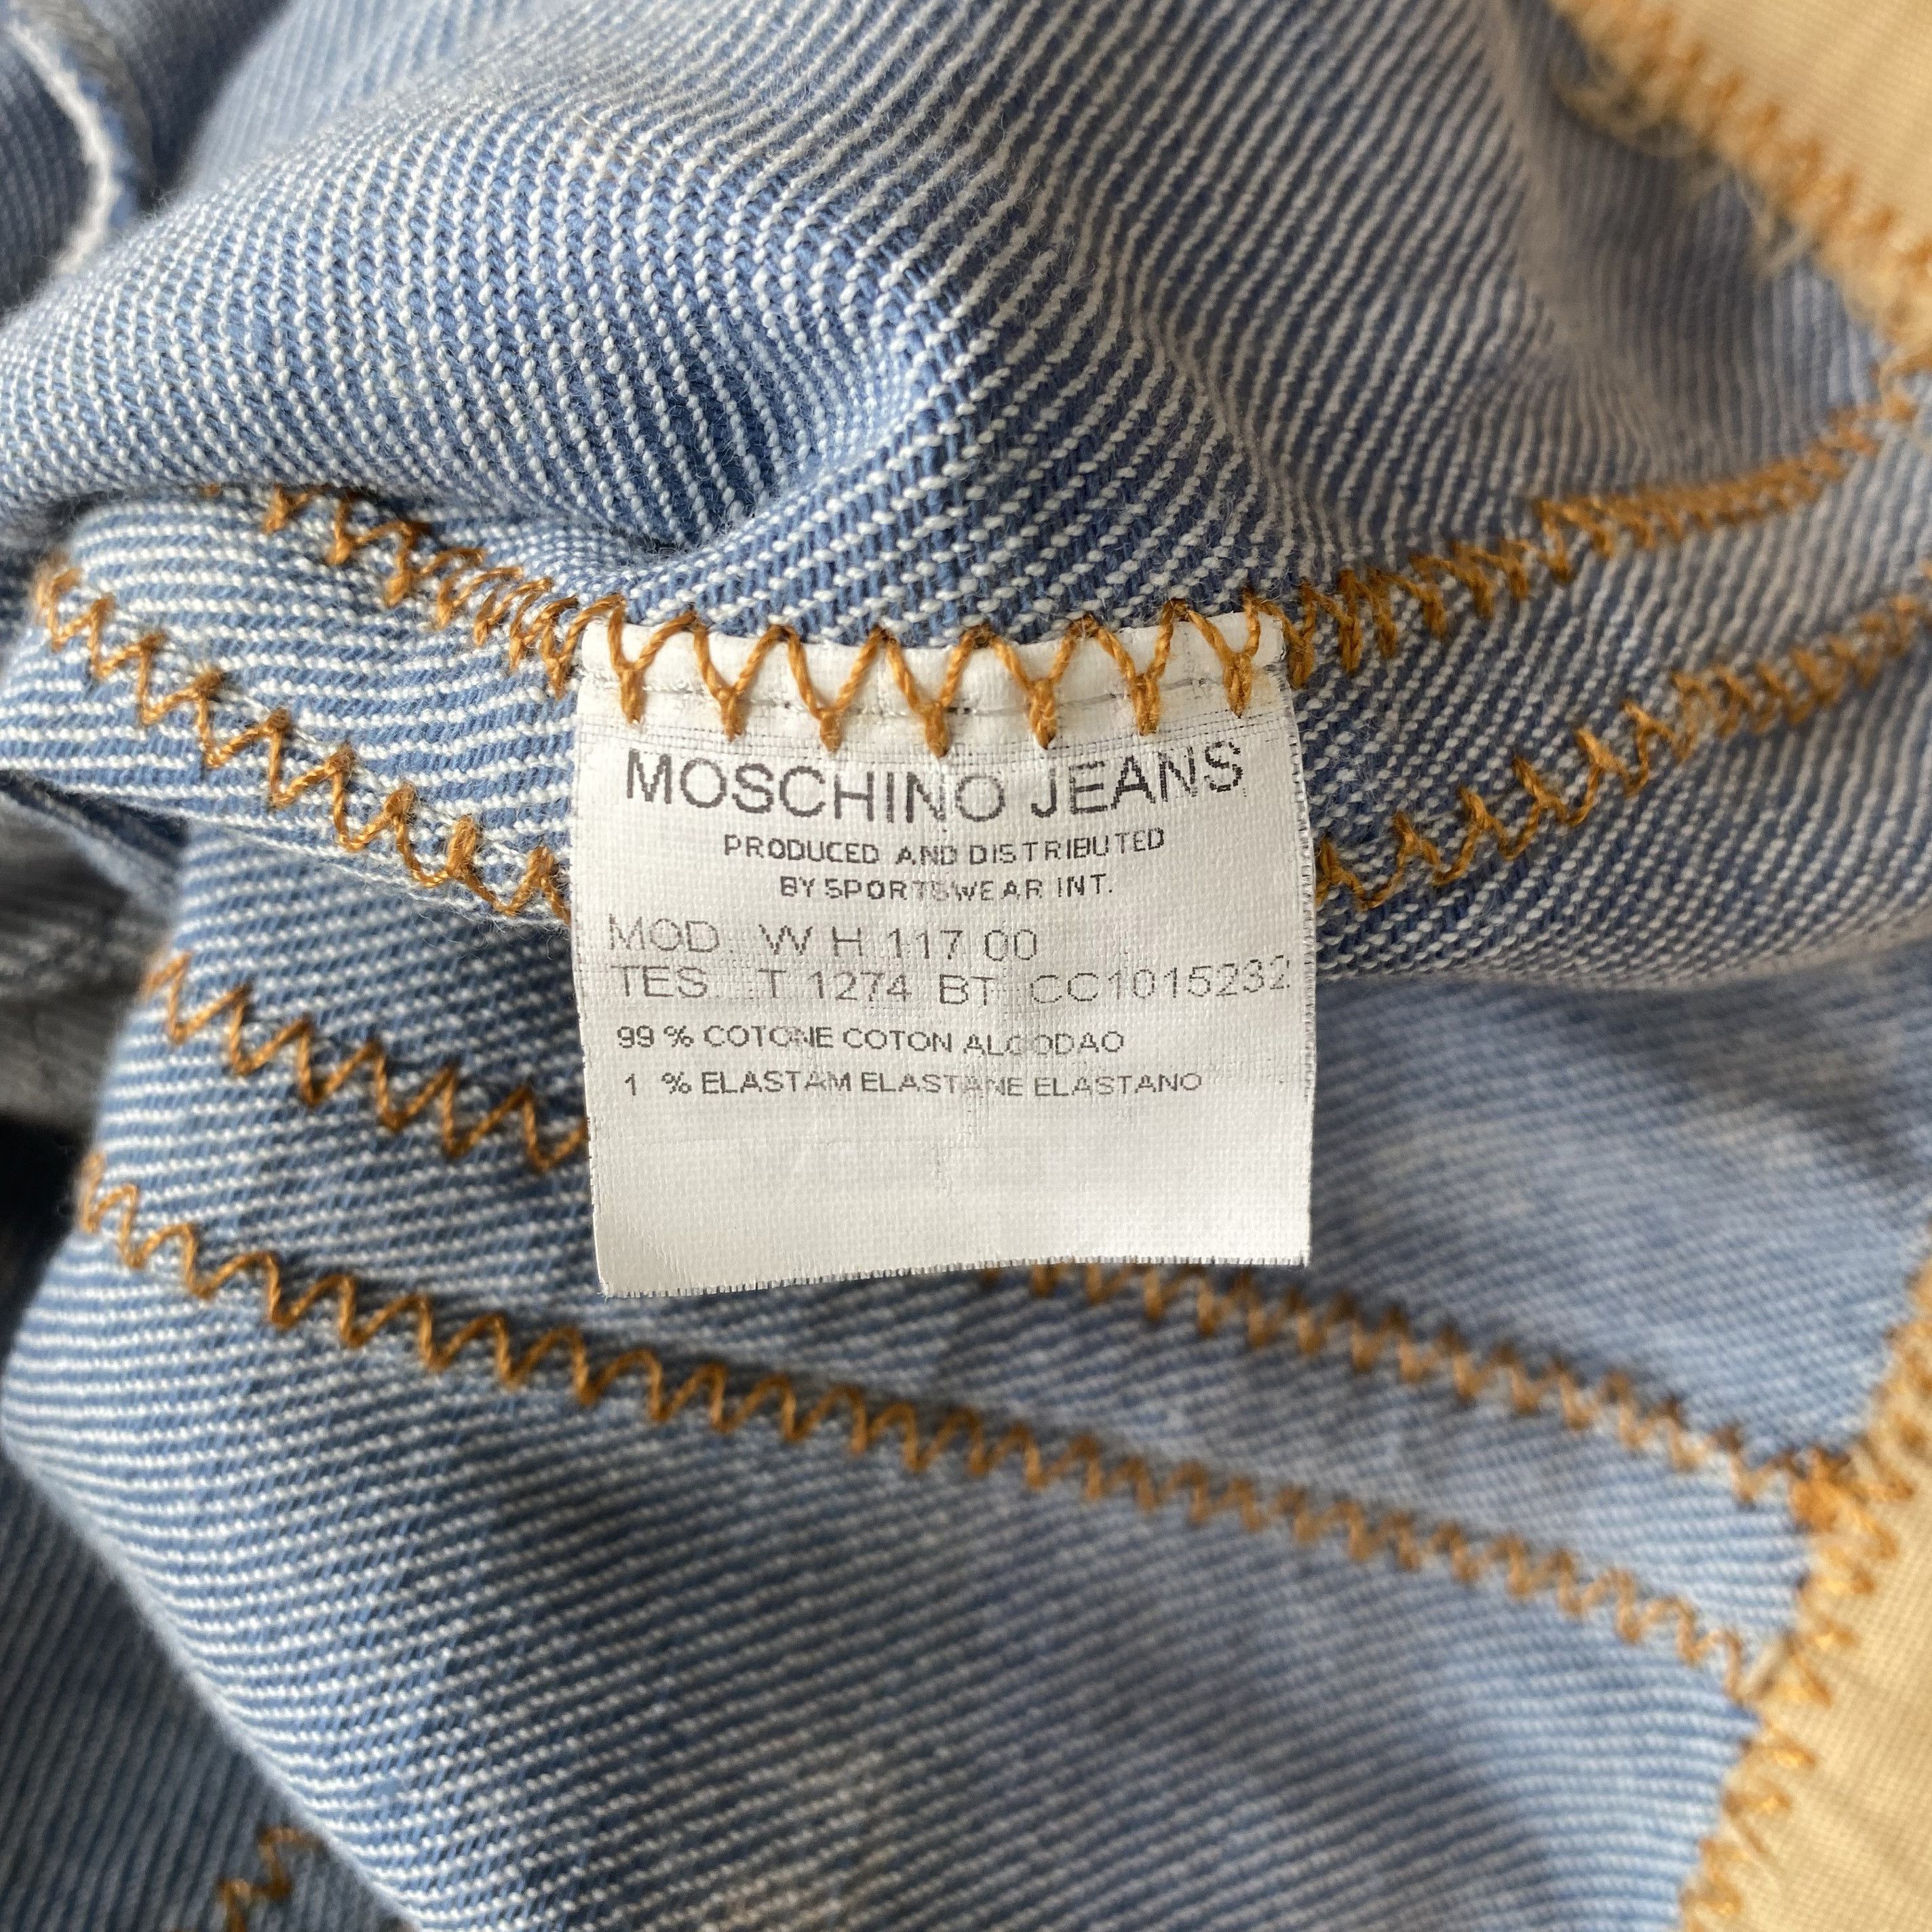 Vintage MOSCHINO Jeans Vintage Light Blue Brown Floral Prints Jacket Size M / US 6-8 / IT 42-44 - 9 Preview